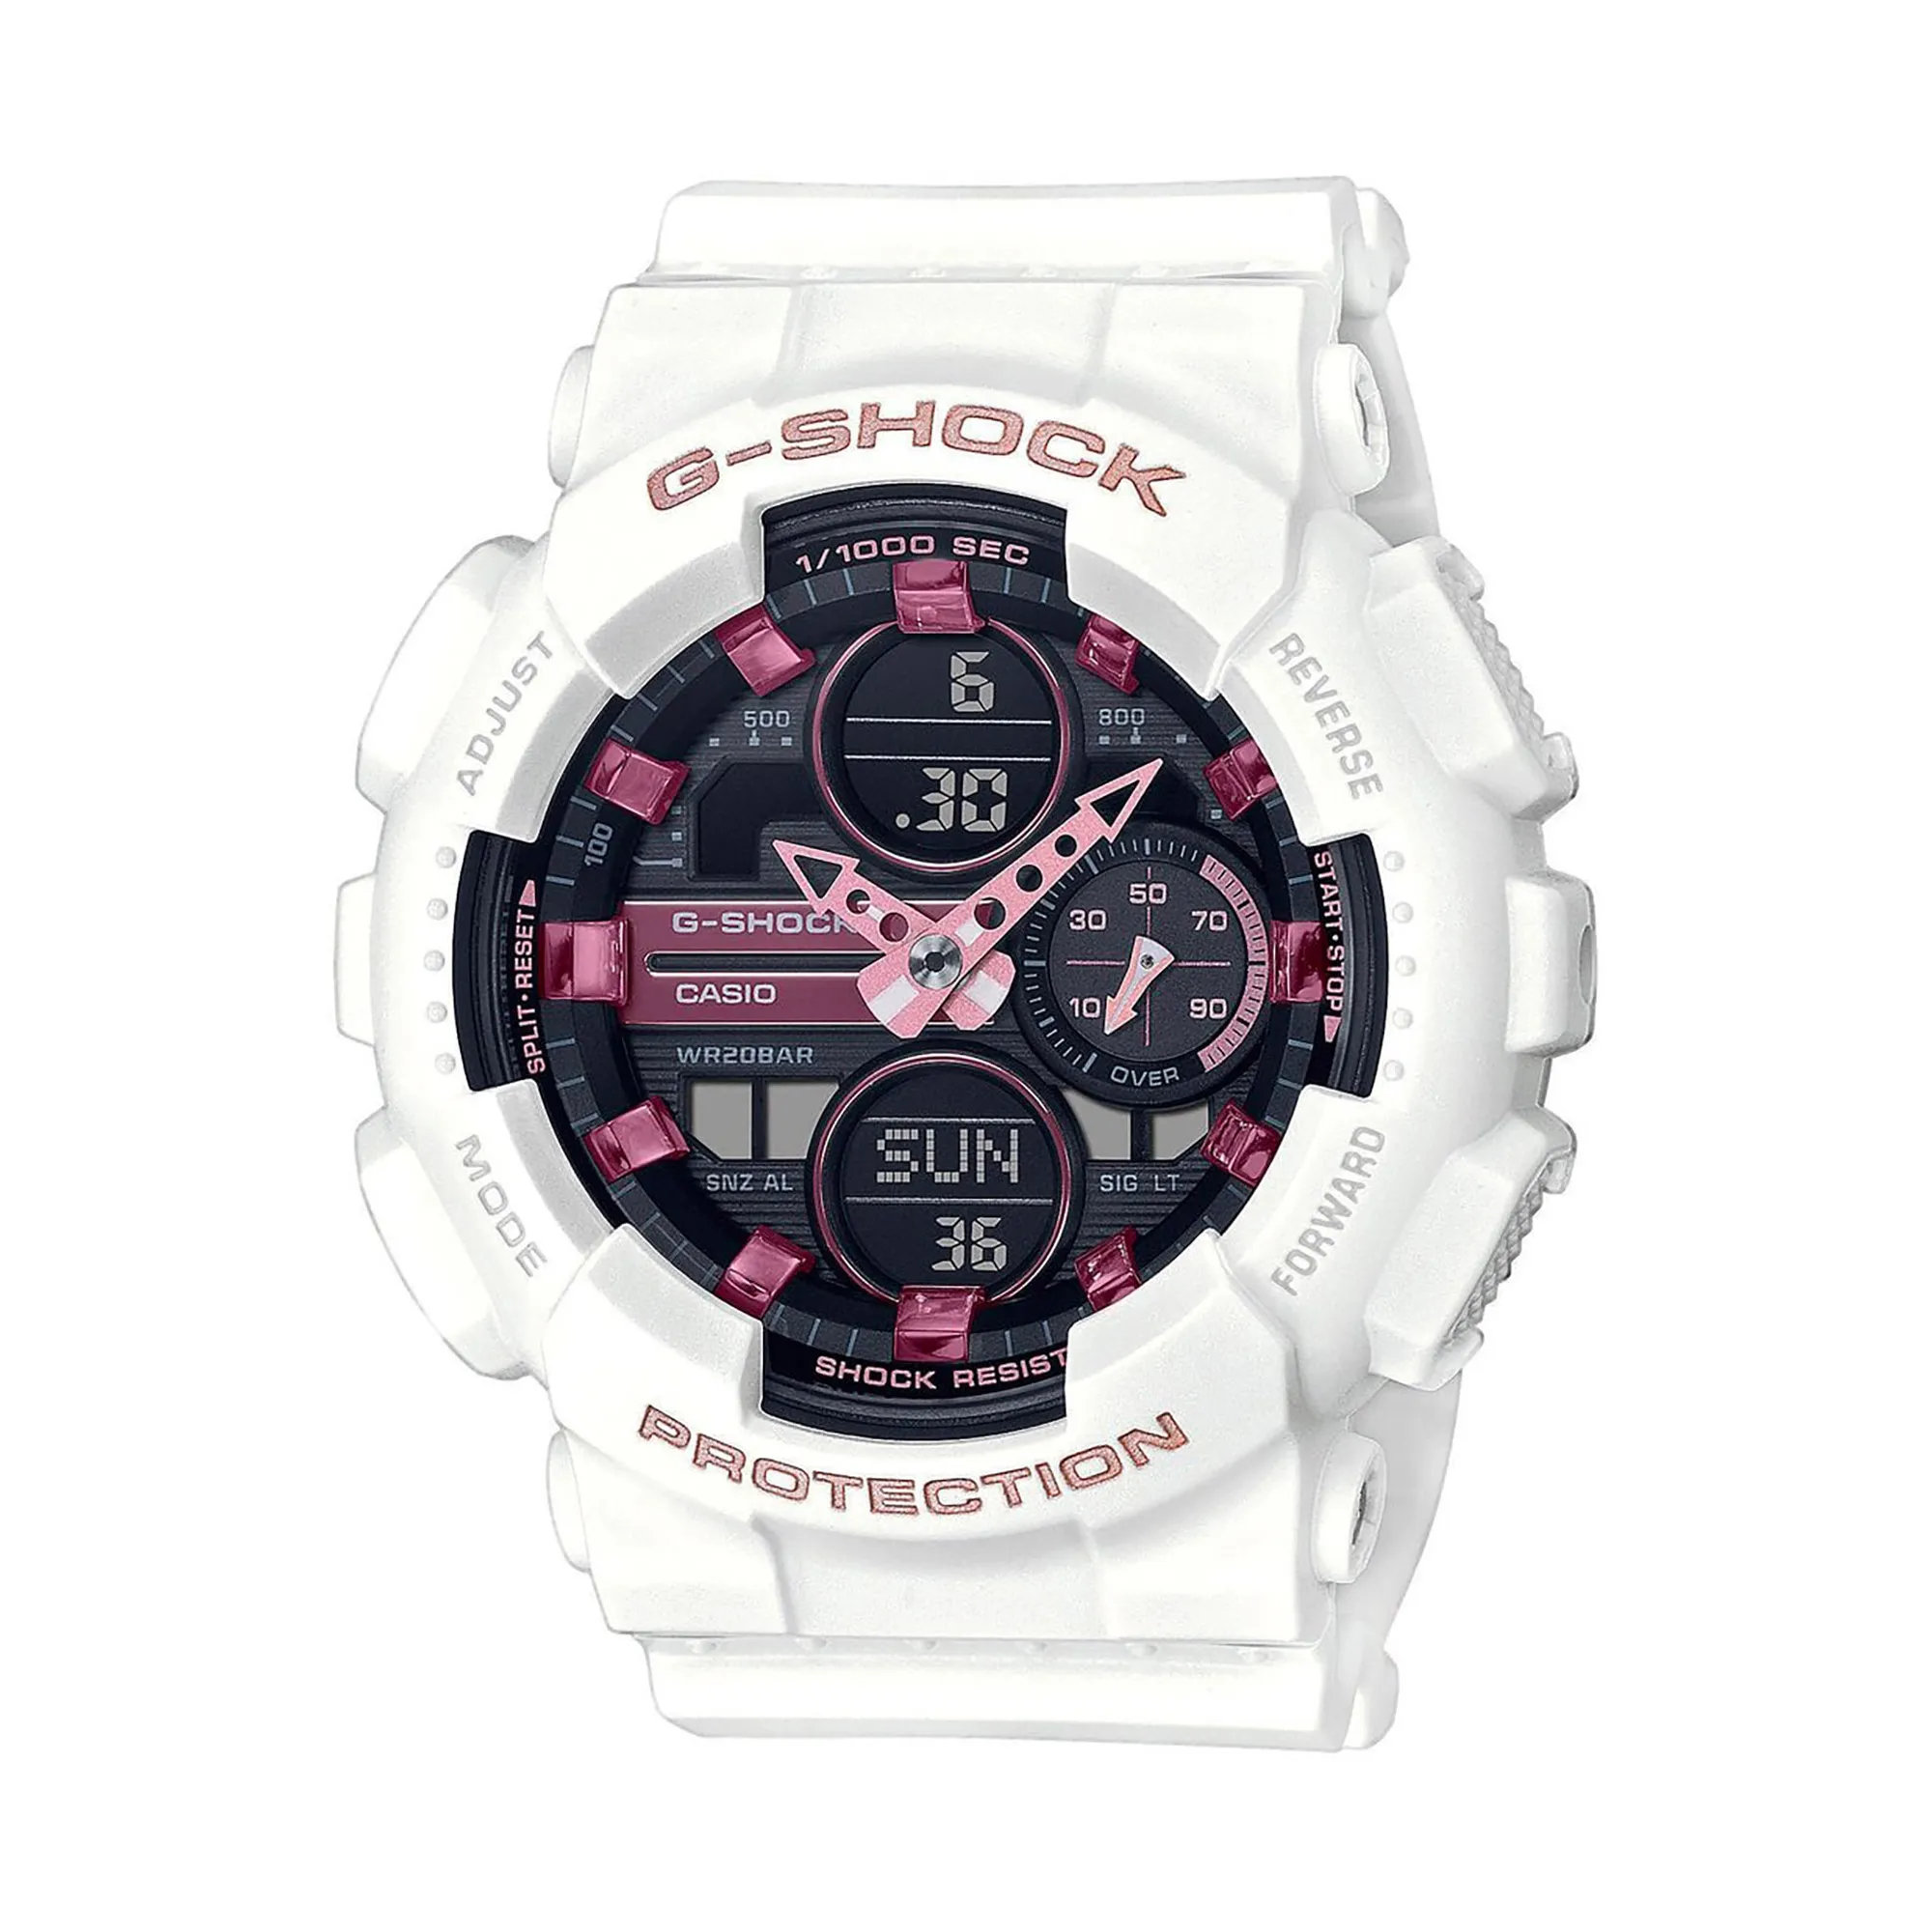 Orologio CASIO G-Shock gma-s140m-7aer